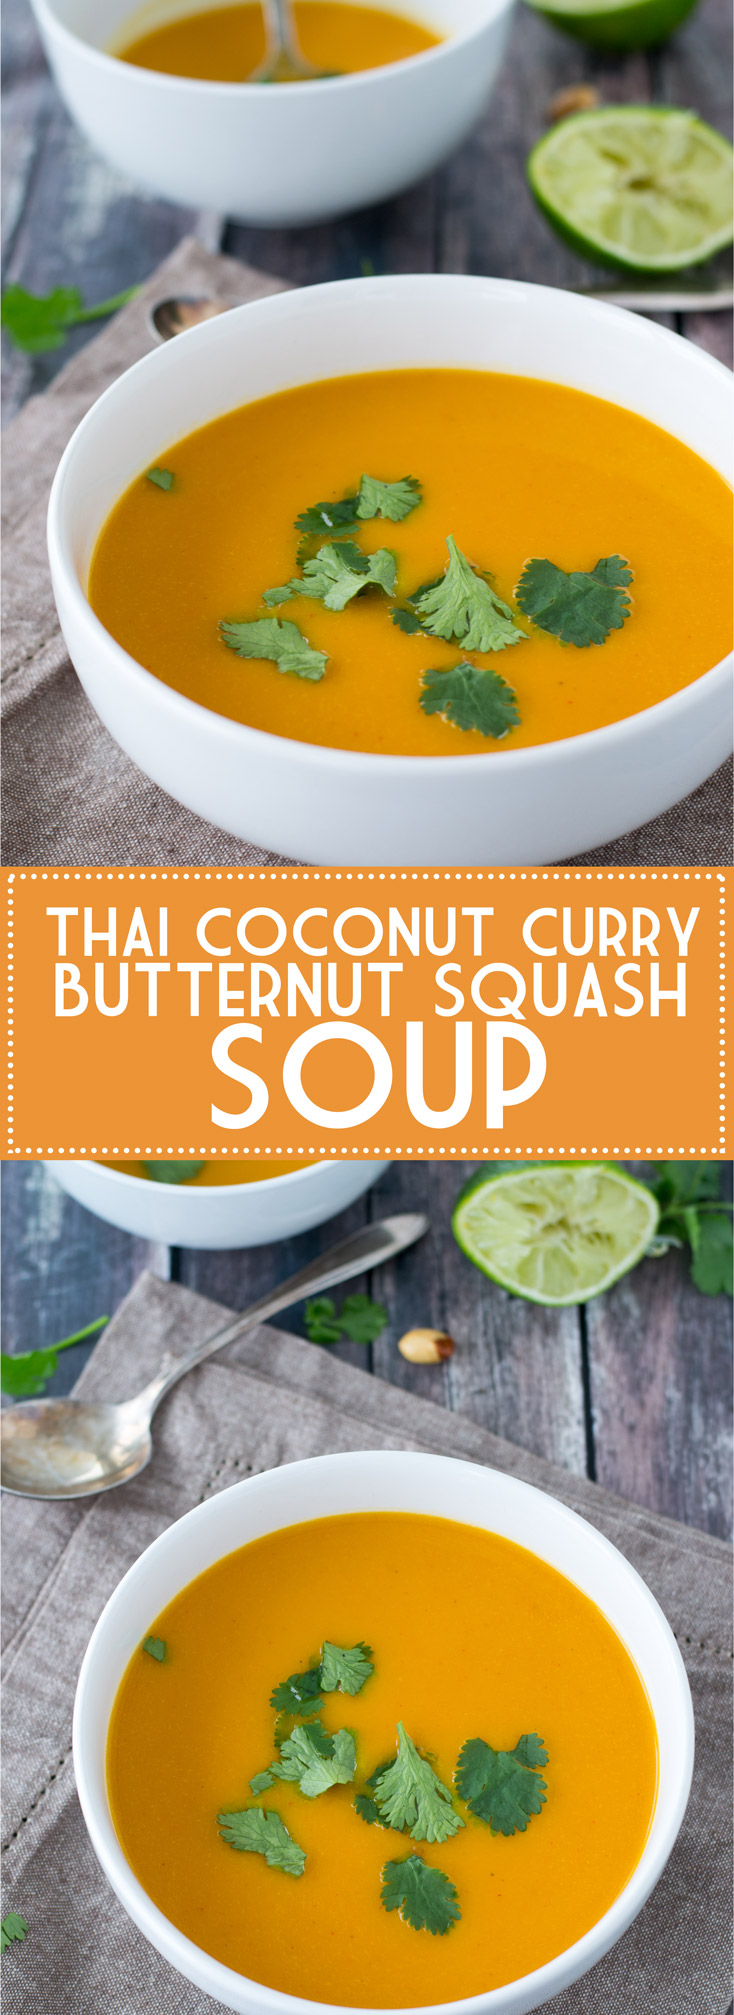 Thai Coconut Curry Butternut Squash Soup | www.motherthyme.com